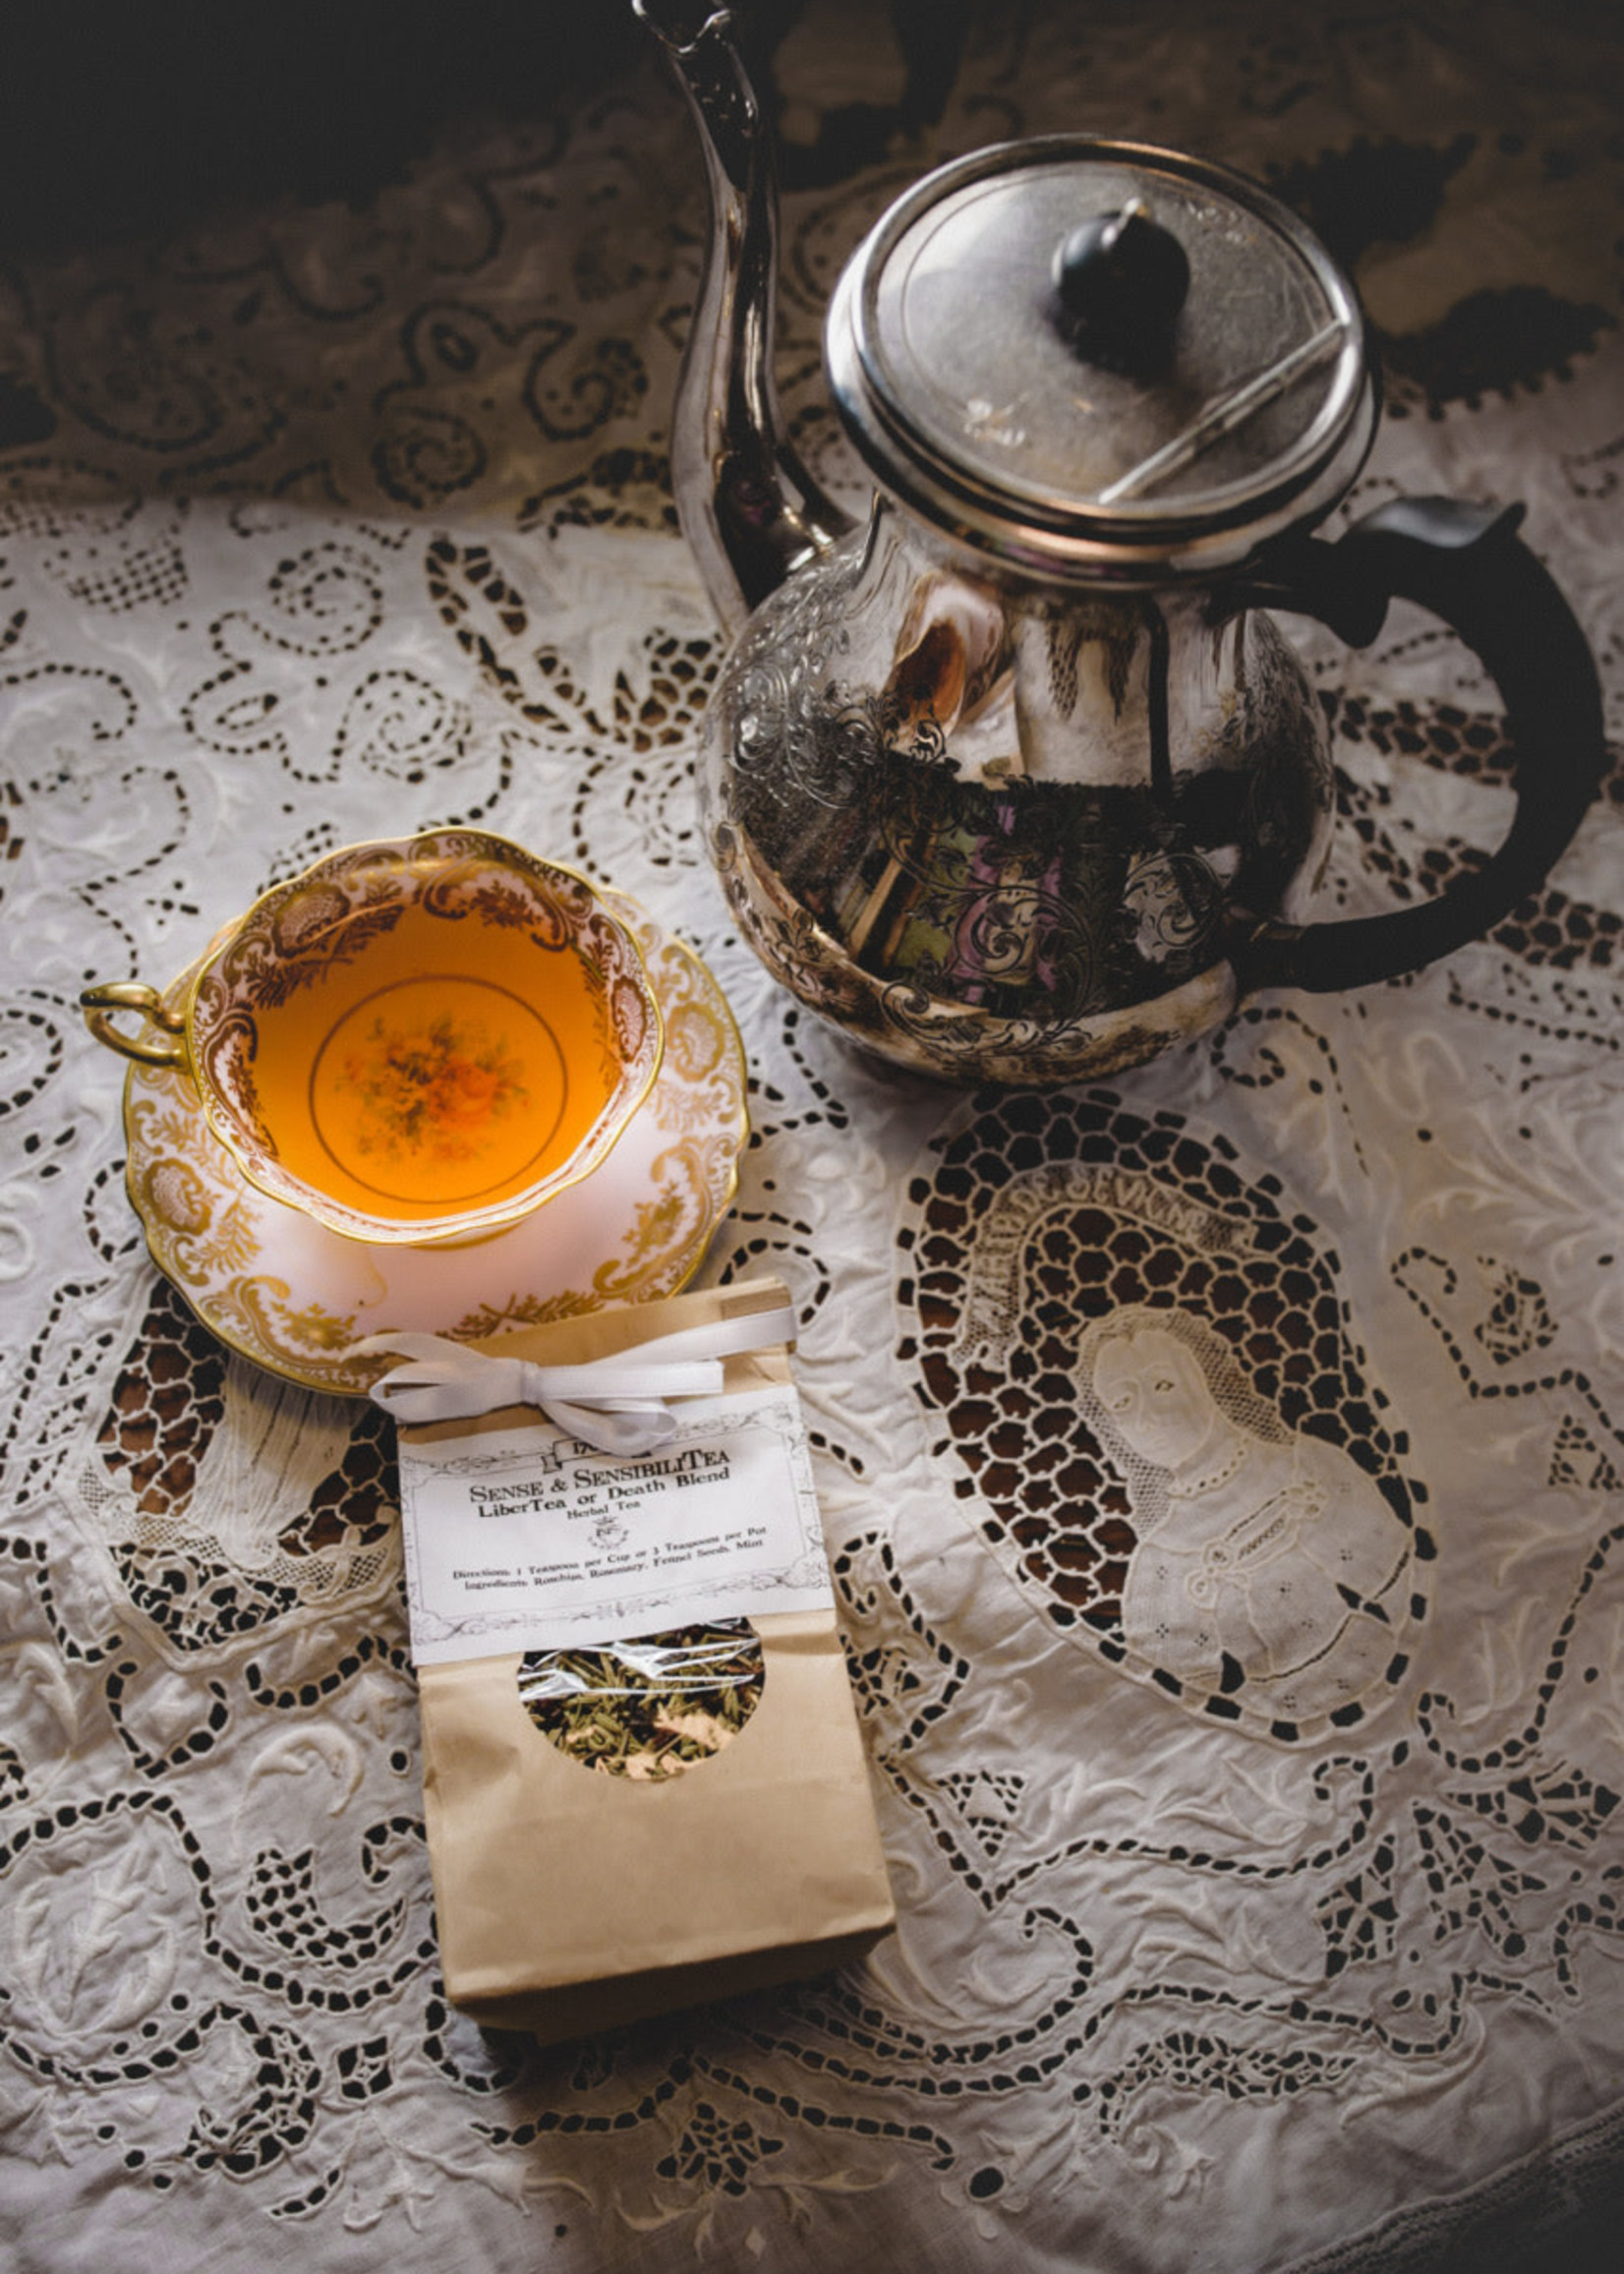 Sense and SensibiliTea 100g LiberTea (Herbal Tea) – 1700s